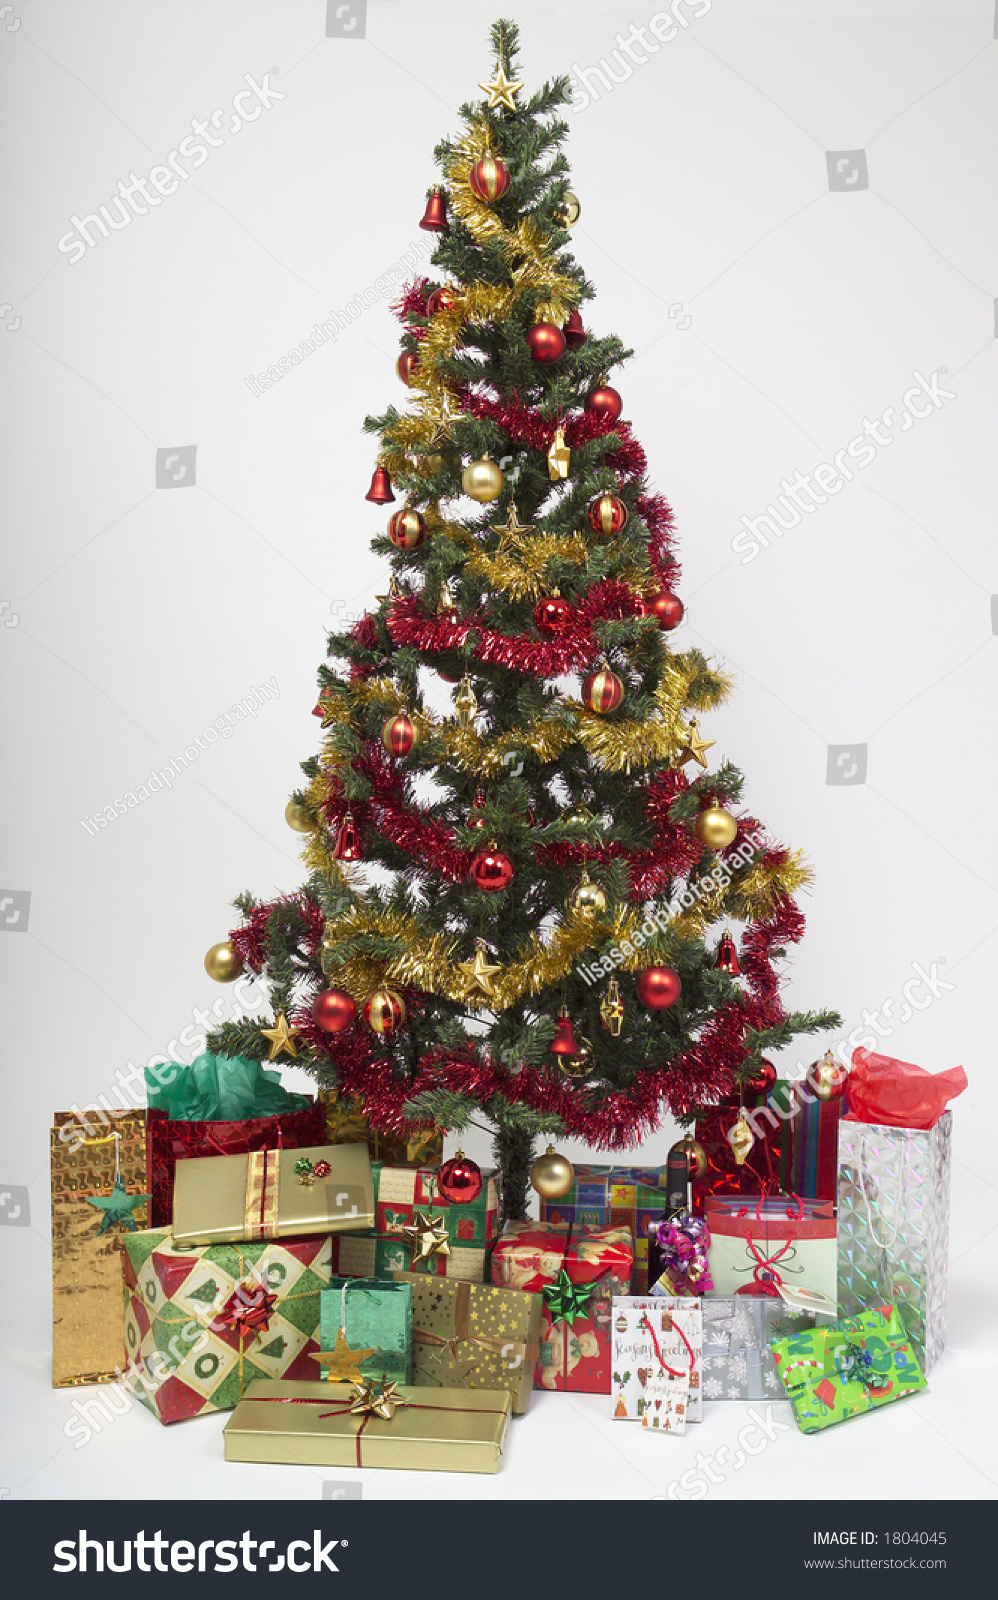 Christmas Tree Stock Photo 1804045 : Shutterstock